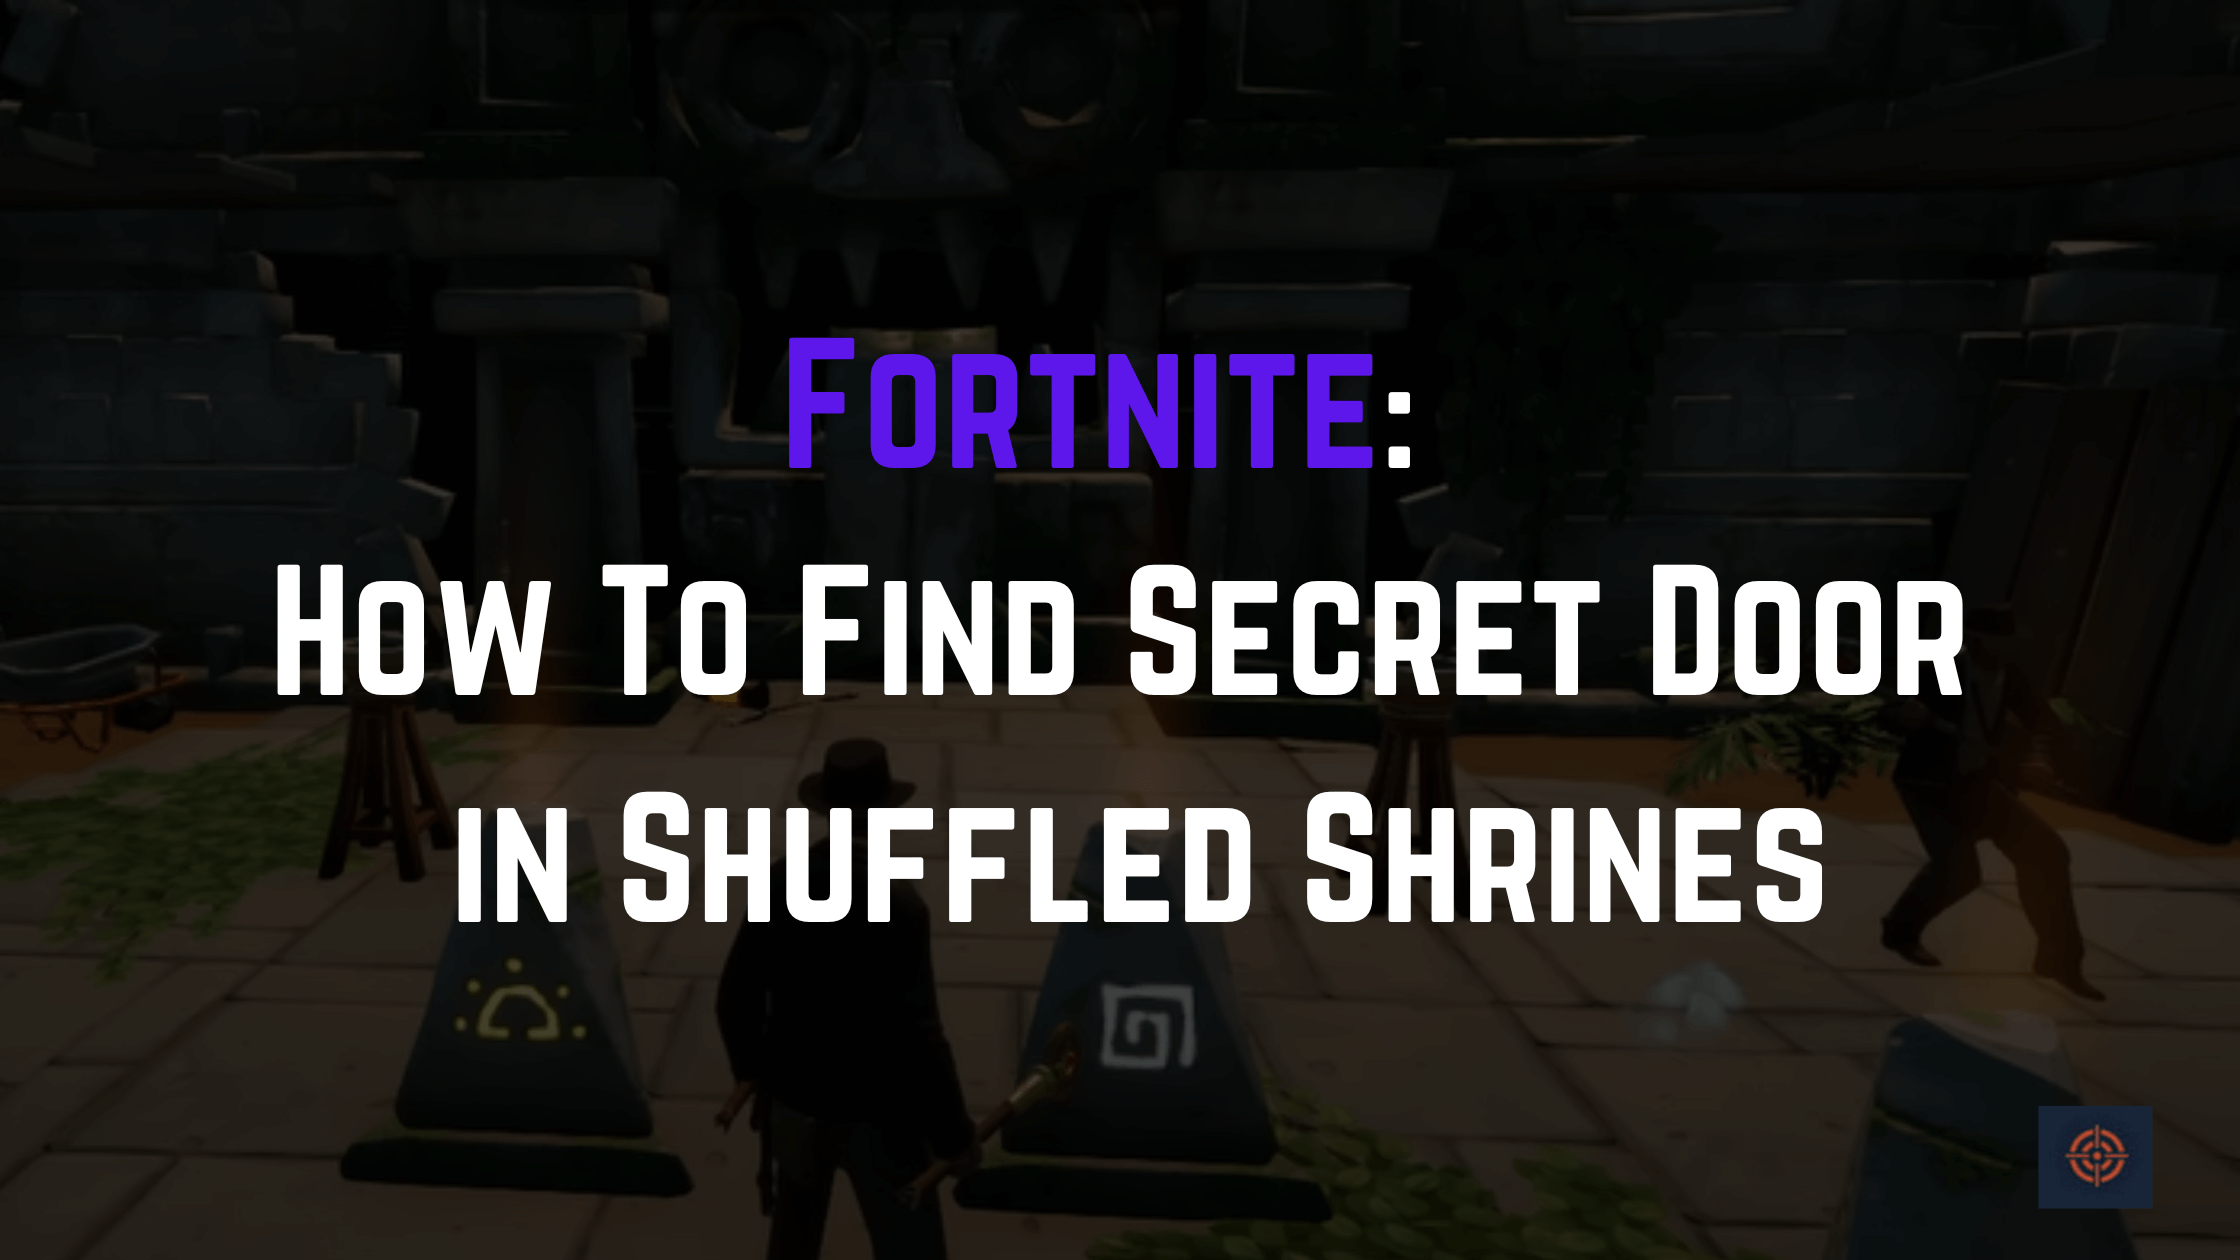 Secret Door Shuffled Shrines